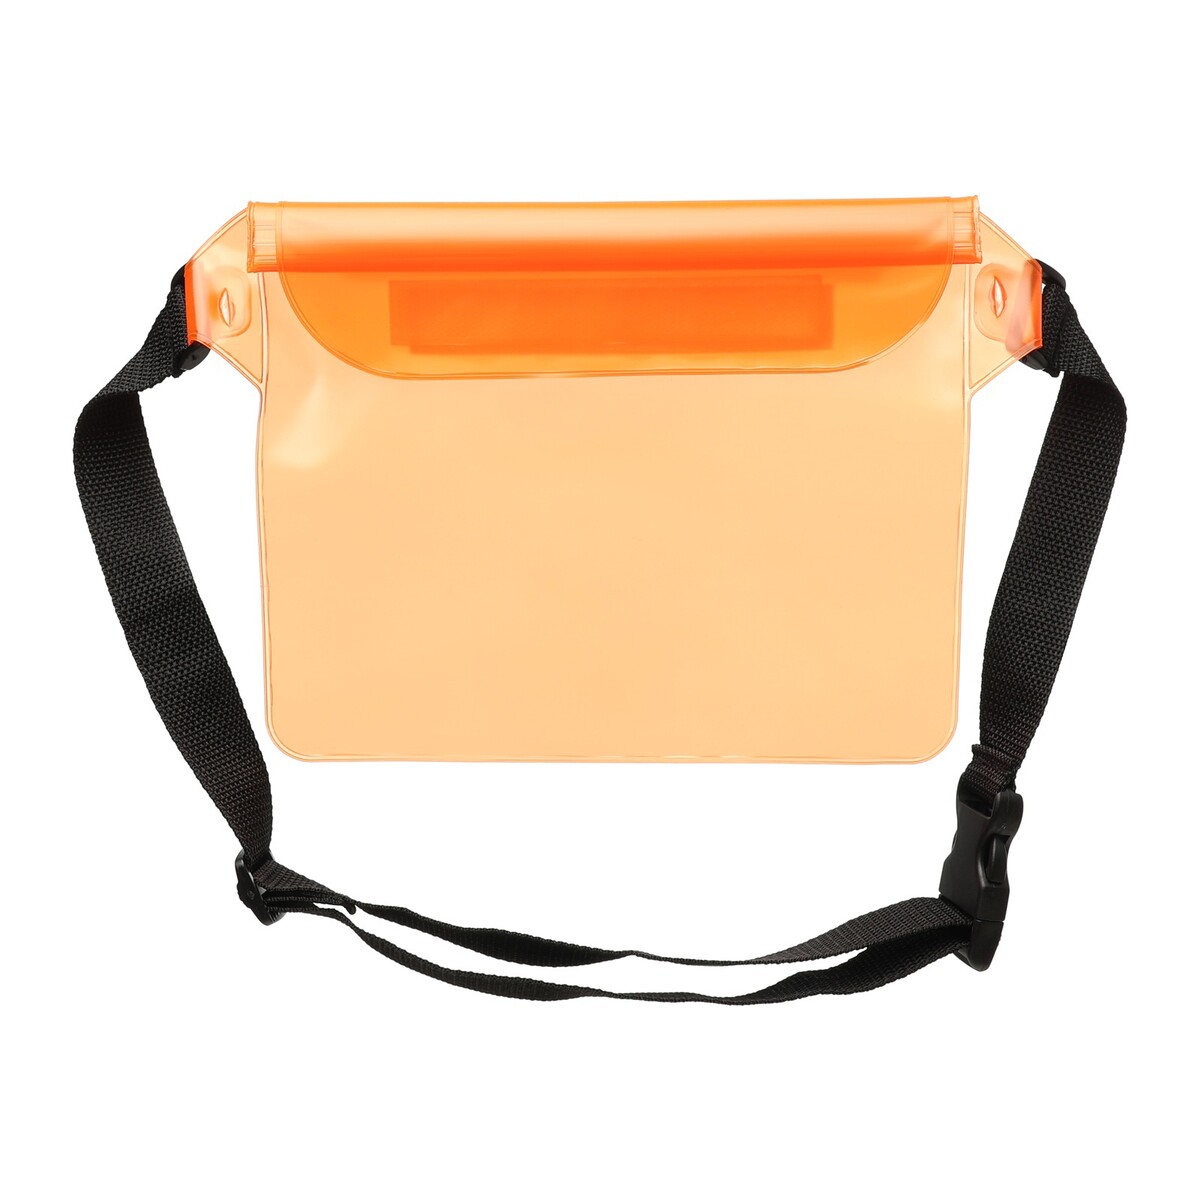 Сумка поясная, водонепроницаемая, оранжевая, 22 х 18 см водонепроницаемая изолента 10×20 см